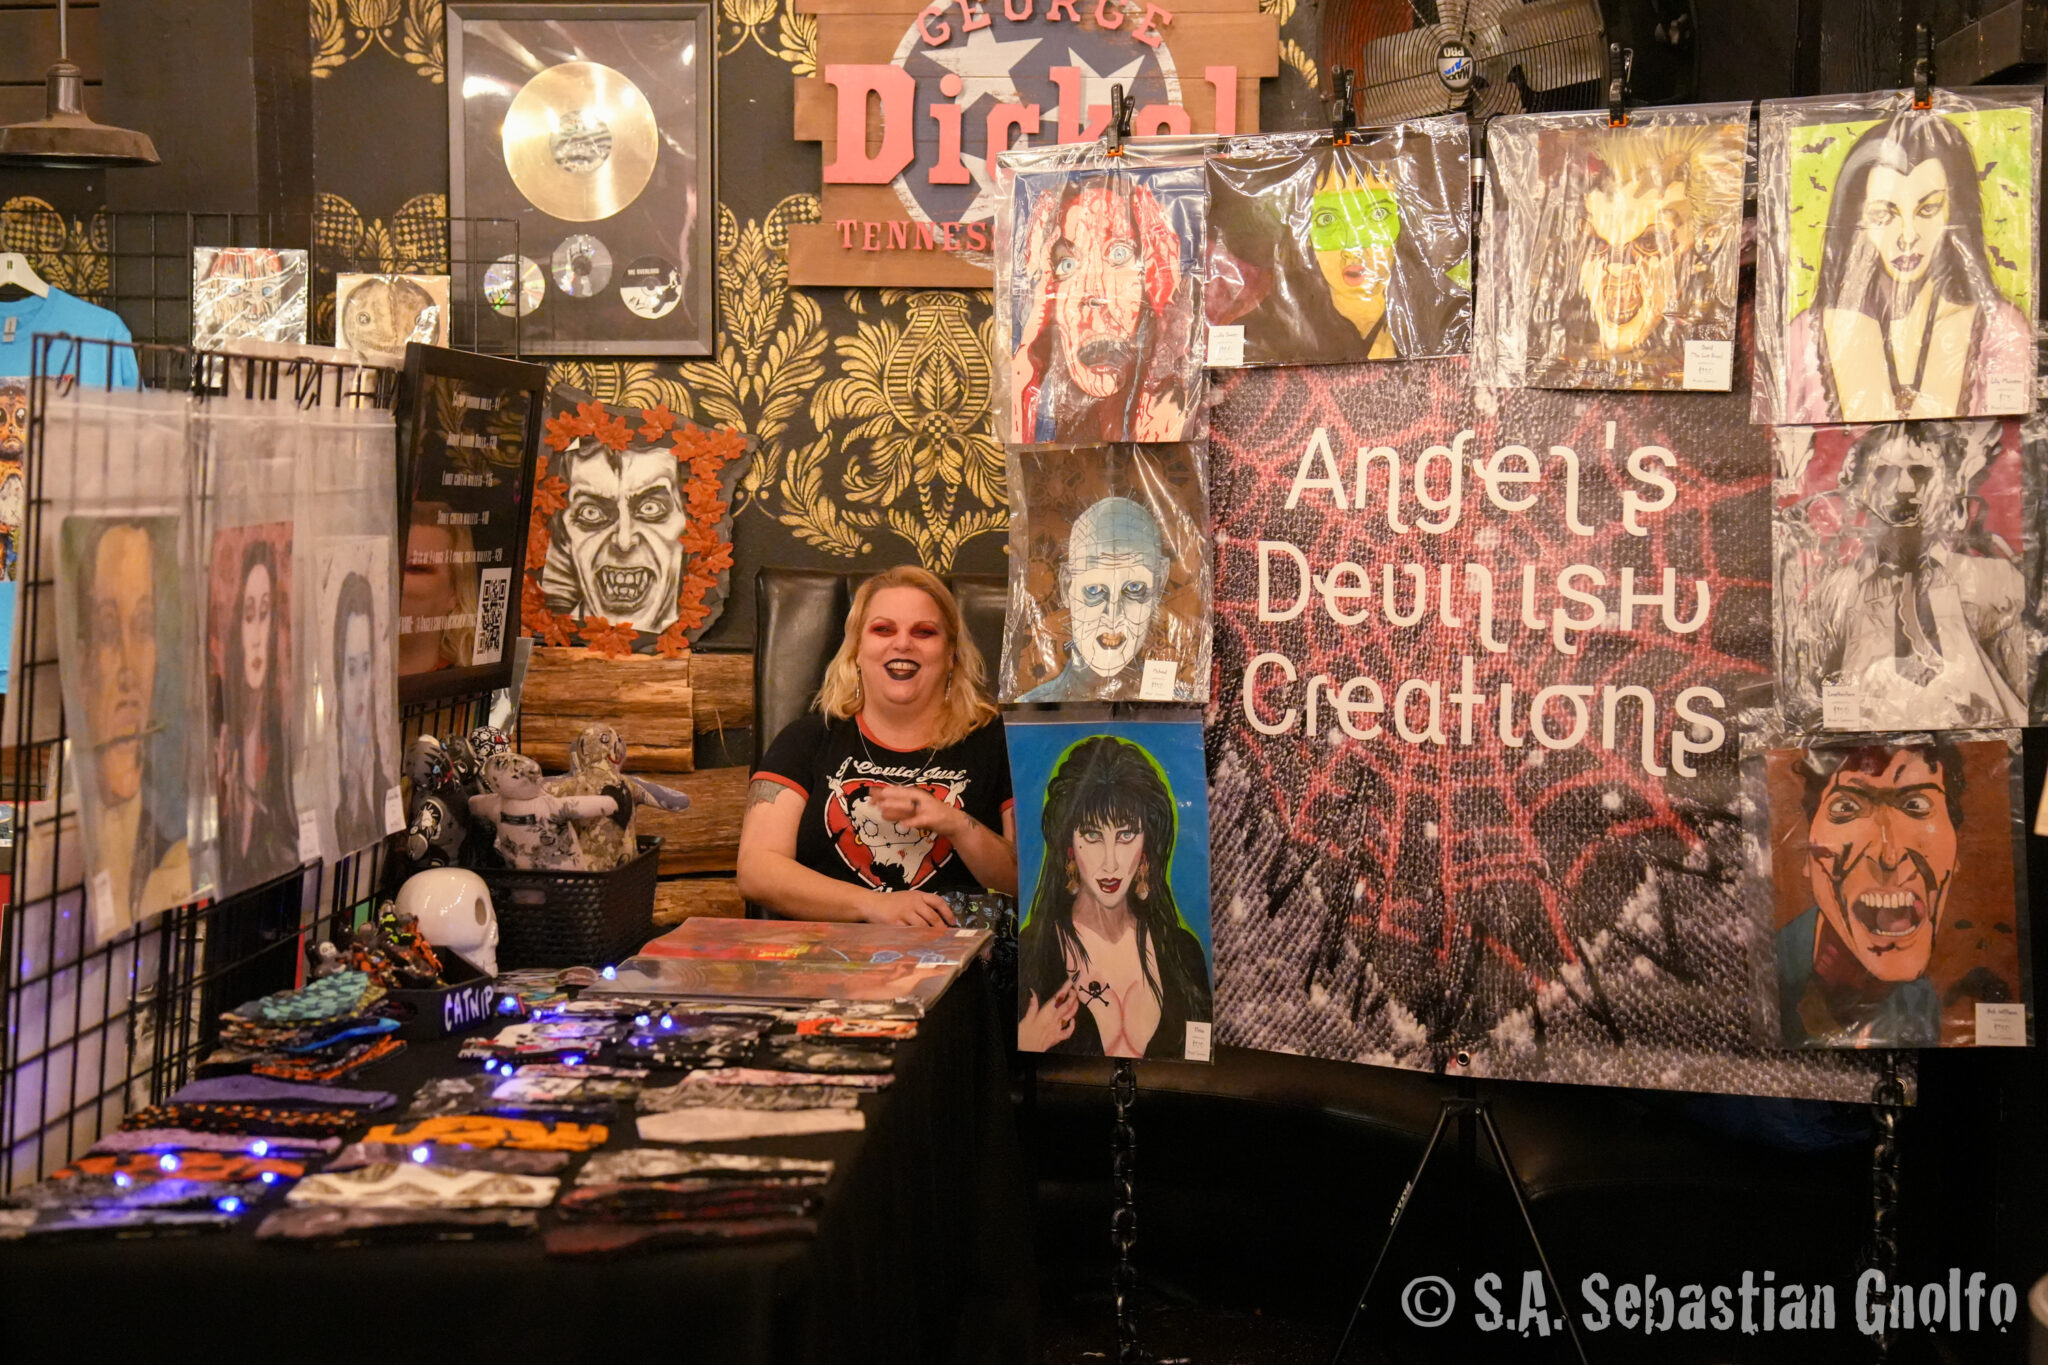 Daywalker Bazaar vendor: Angel's Devilish Creations